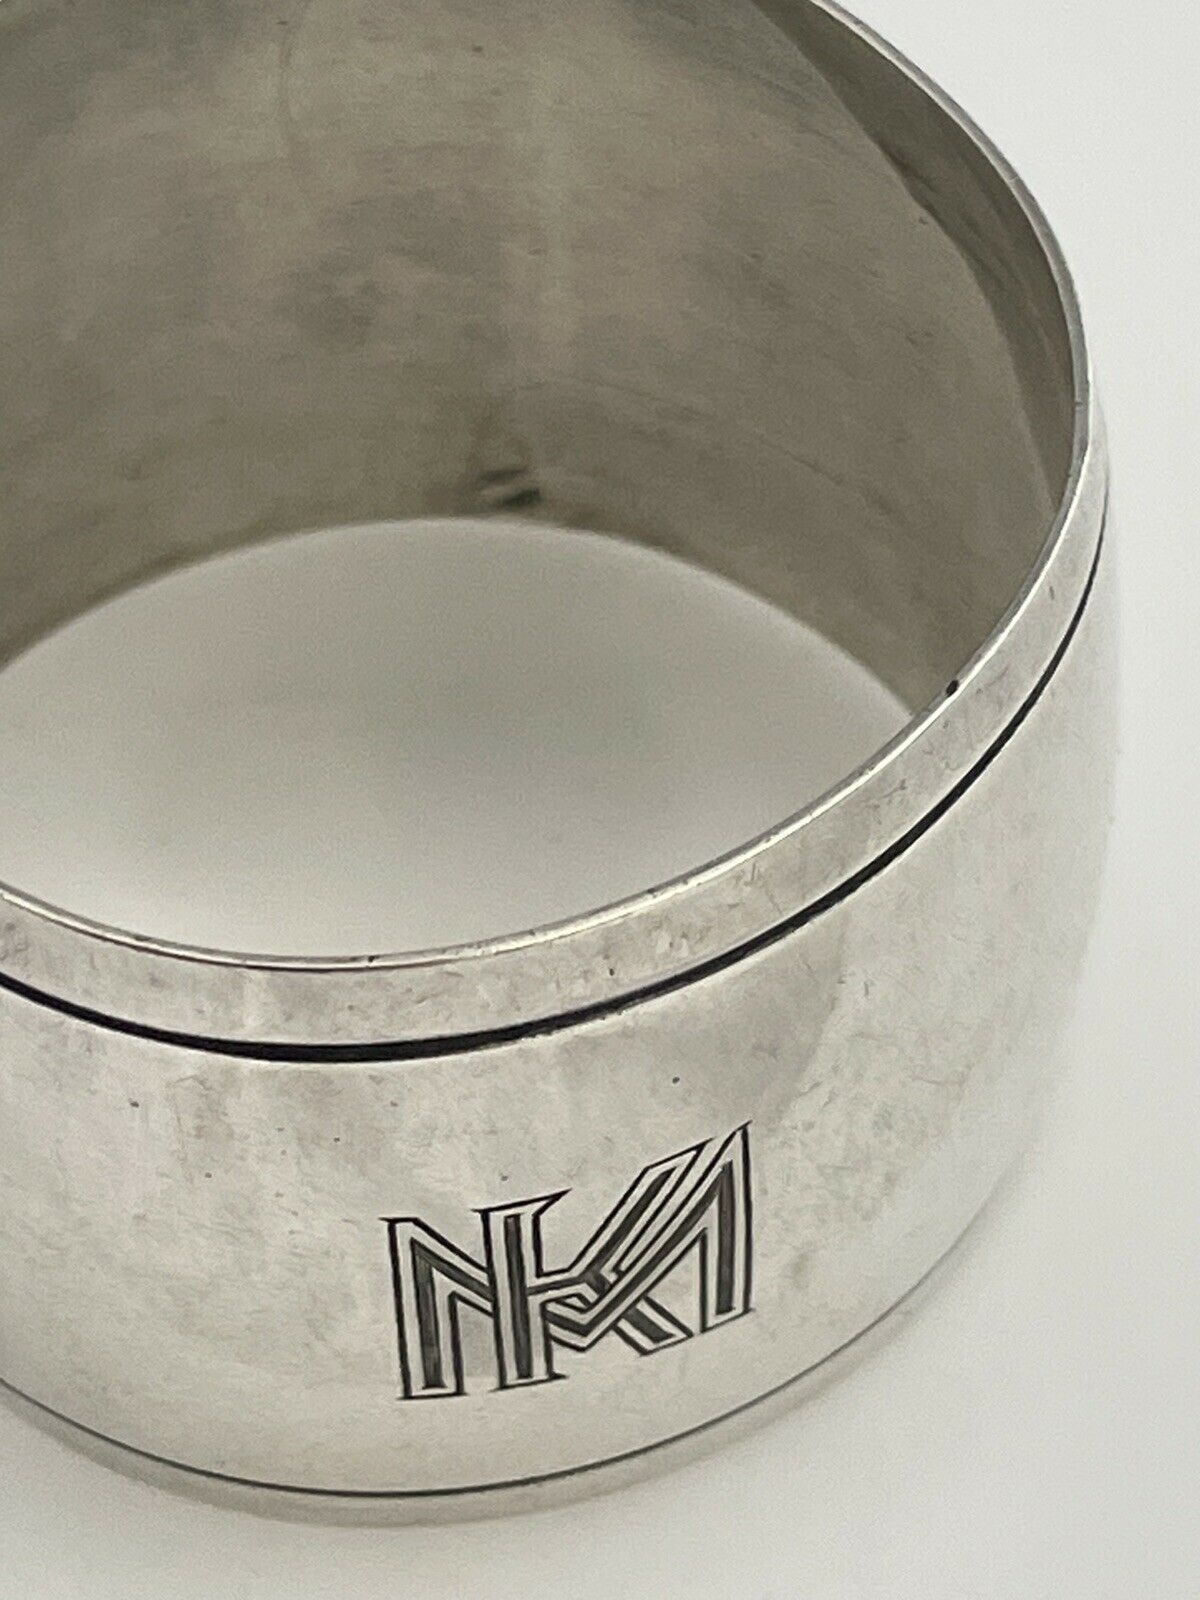 French Deco Sterling Silver Napkin Ring France Saglier Bros c 1920 Mono KM